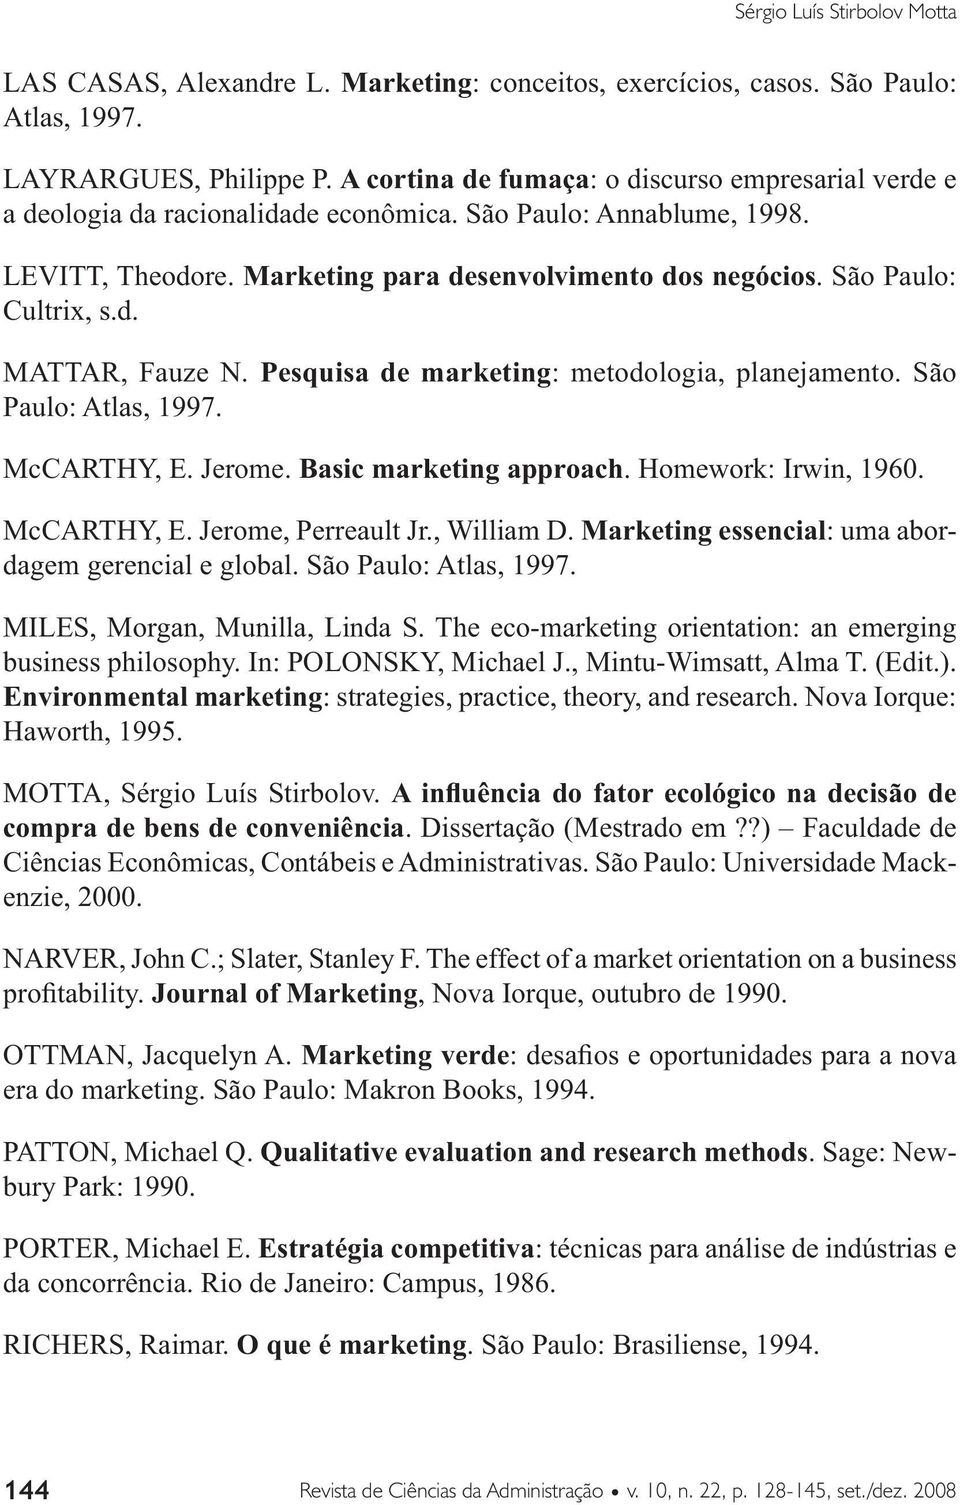 São Paulo: Cultrix, s.d. MATTAR, Fauze N. Pesquisa de marketing: metodologia, planejamento. São Paulo: Atlas, 1997. McCARTHY, E. Jerome. Basic marketing approach. Homework: Irwin, 1960. McCARTHY, E. Jerome, Perreault Jr.